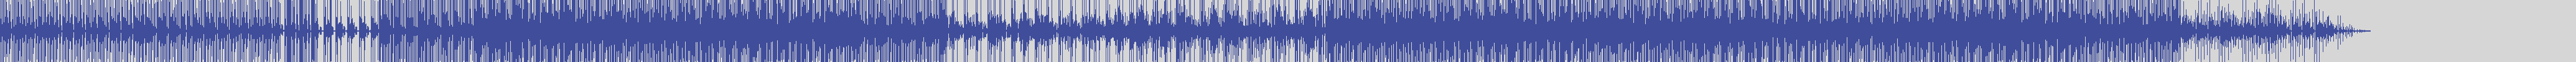 atomic_recordings [AR018] Liam Rascel - Crunch [Original Version] audio wave form